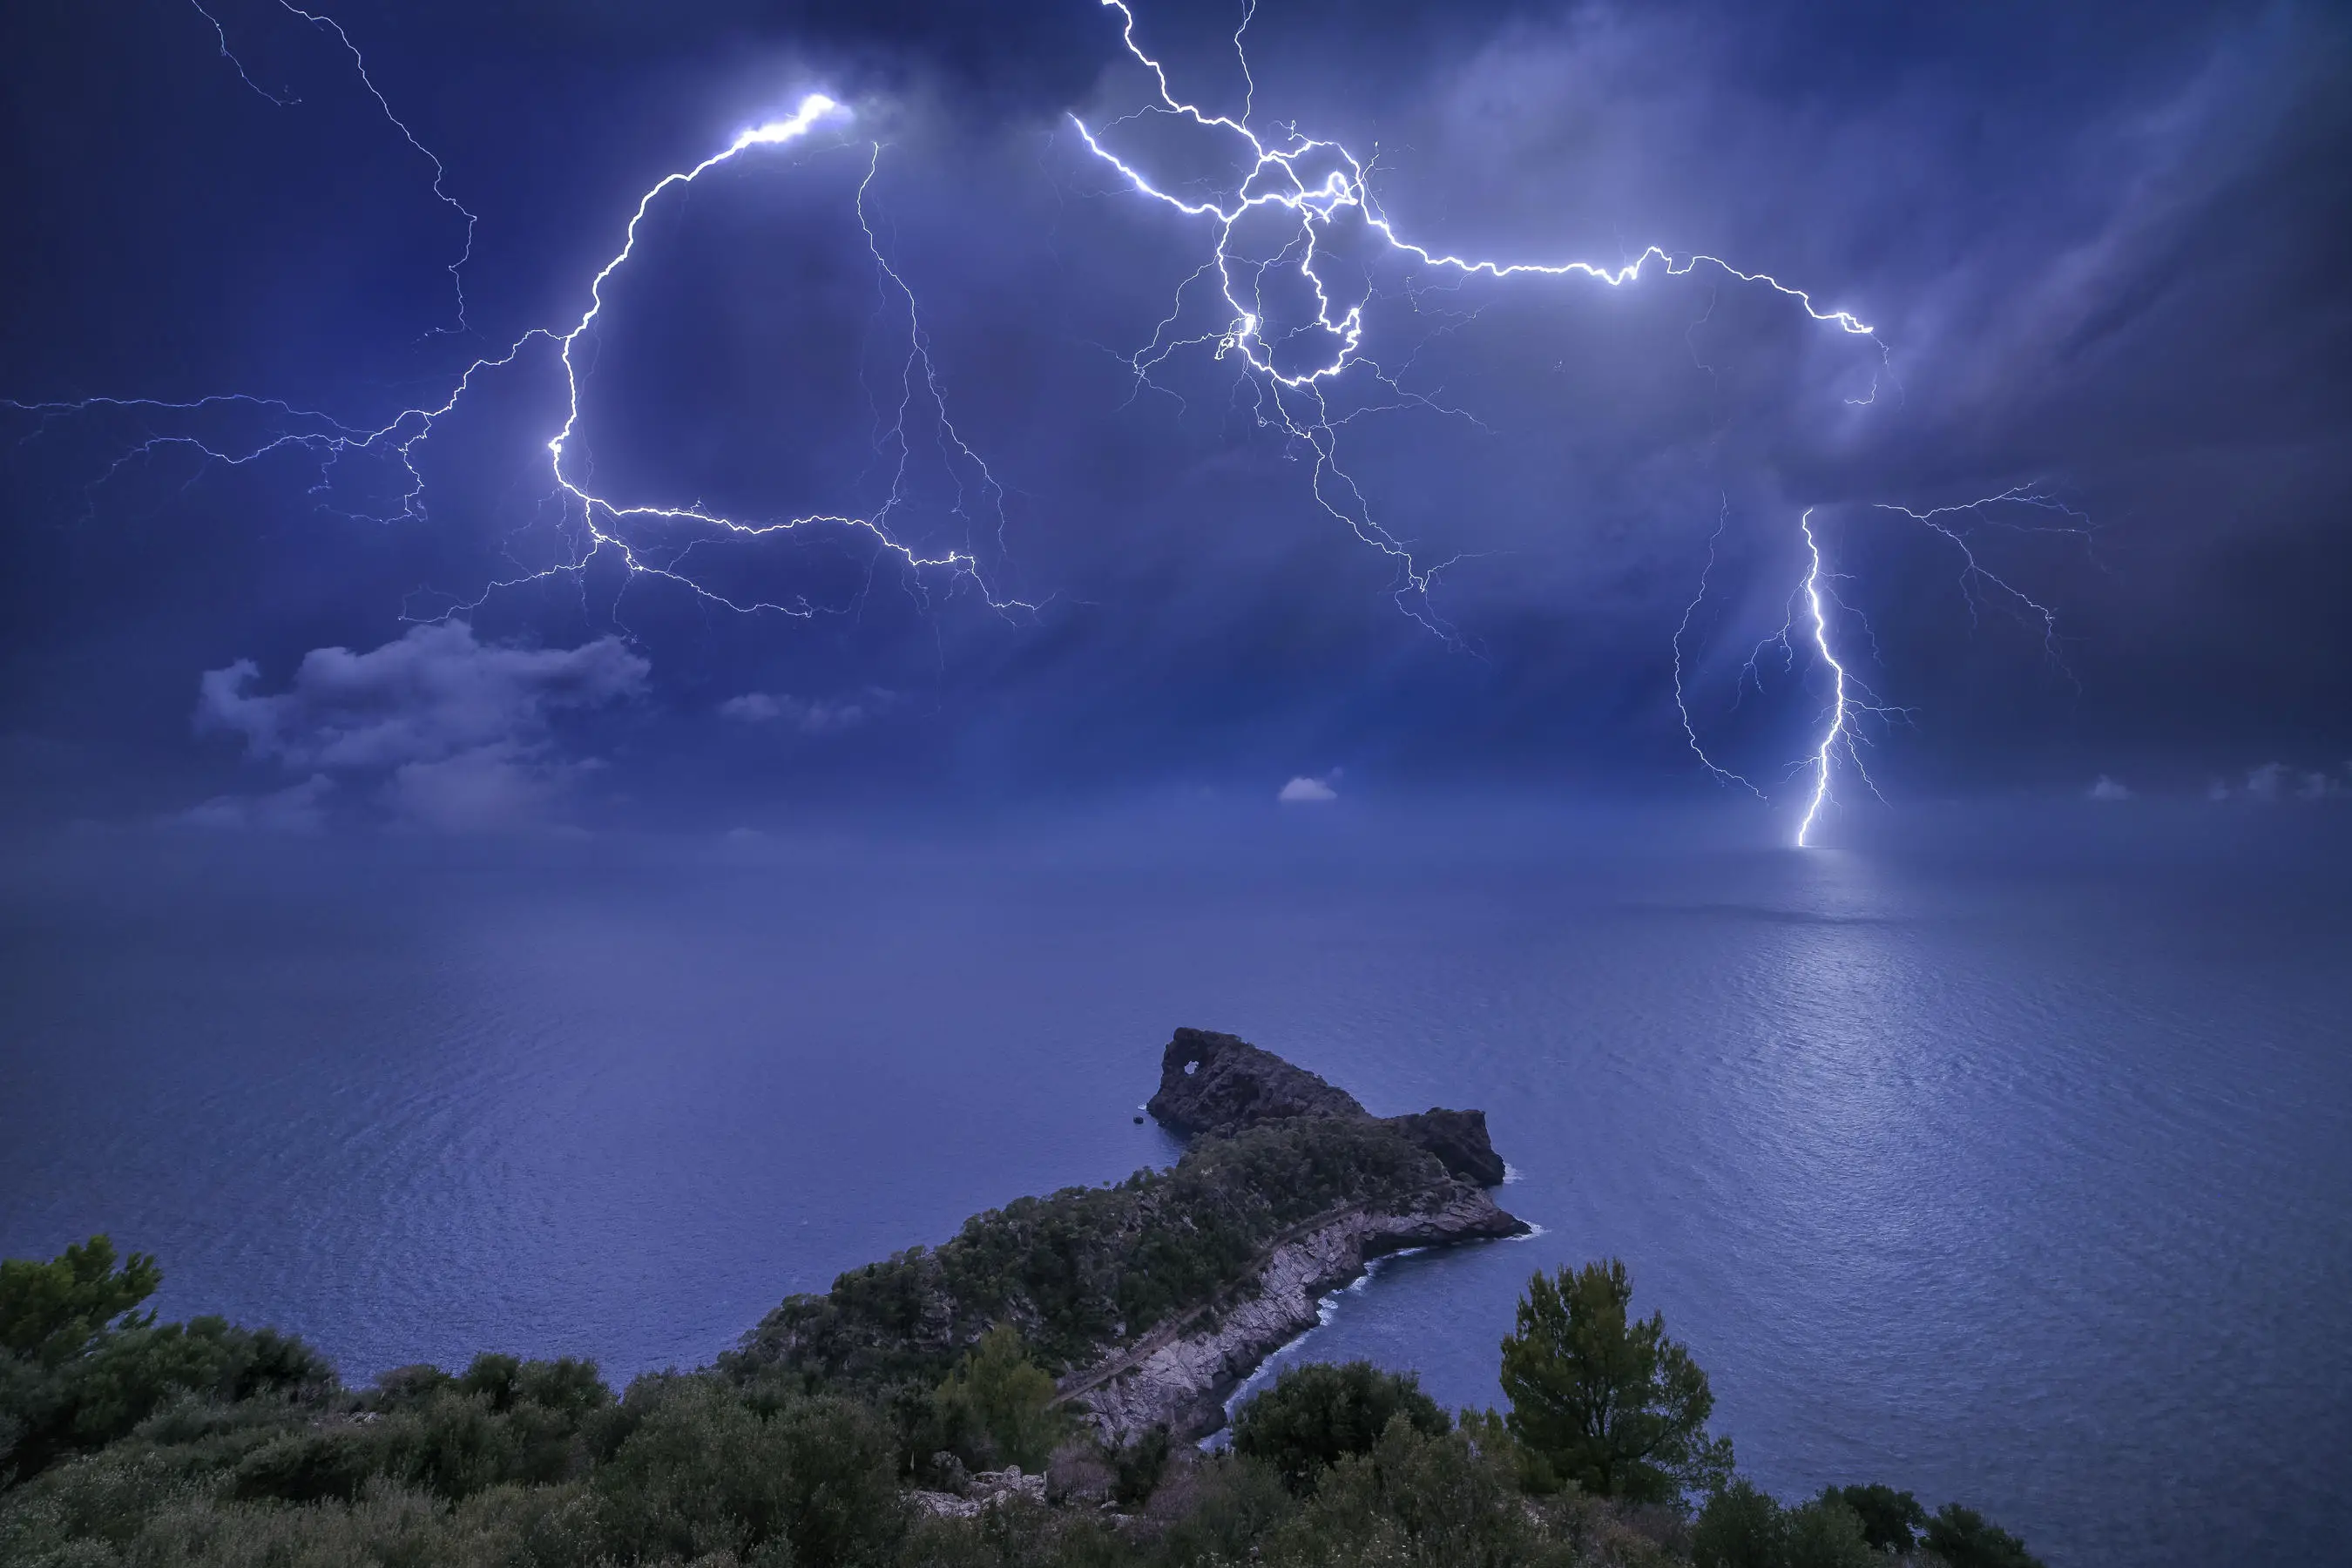 La foudre fend le ciel de Majorque en Espagne. Selon le photographe Marc Marco Ripoll, 